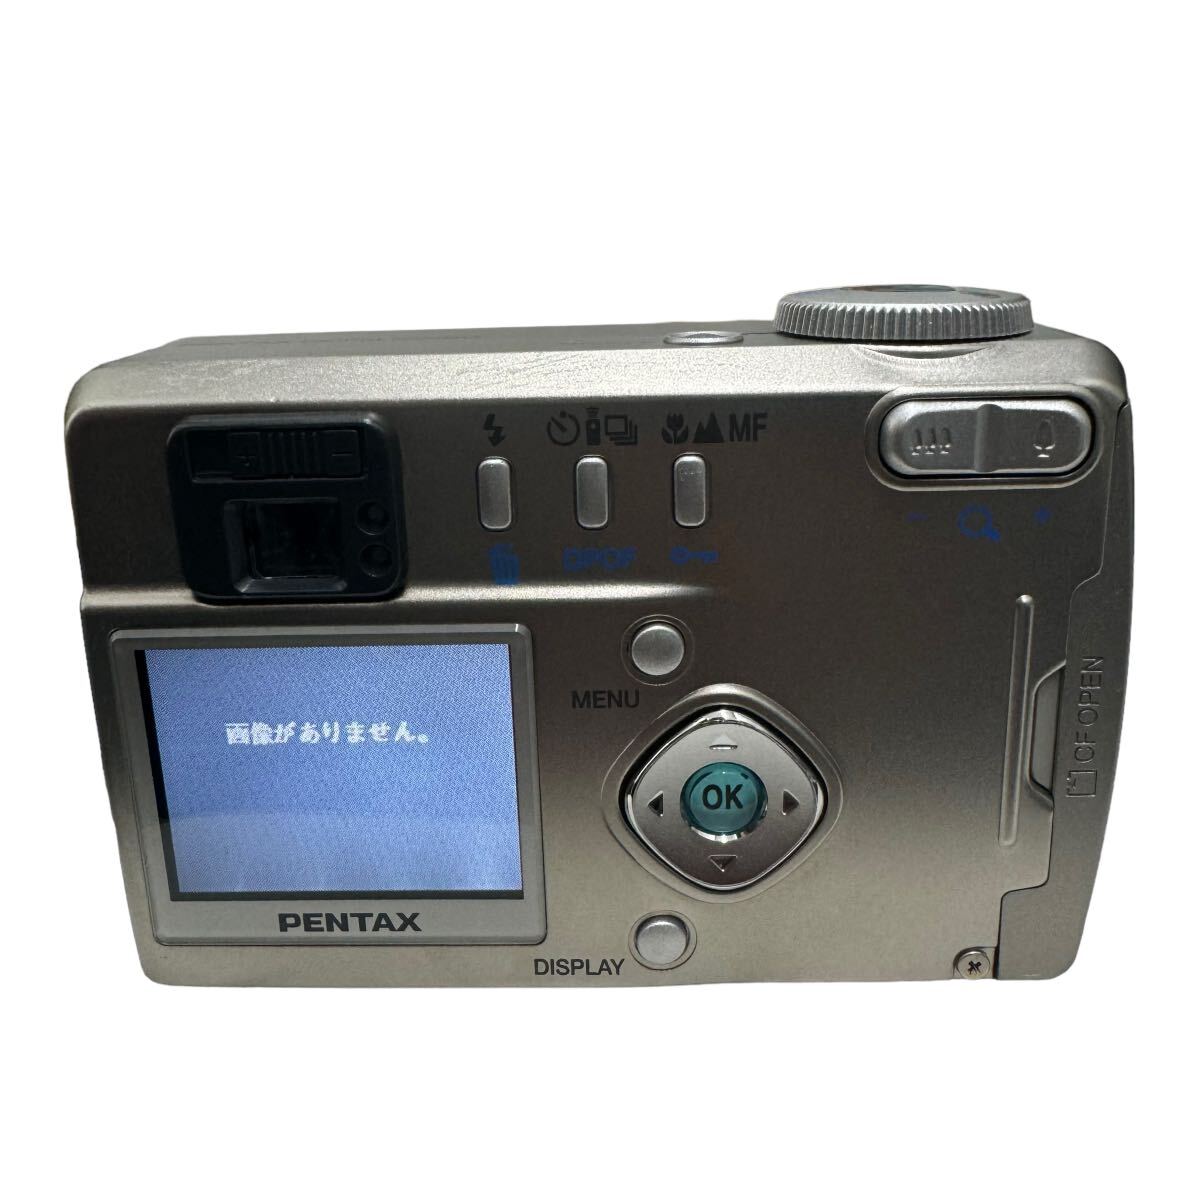  operation goods PENTAX Pentax Optio 330 compact digital camera 10228